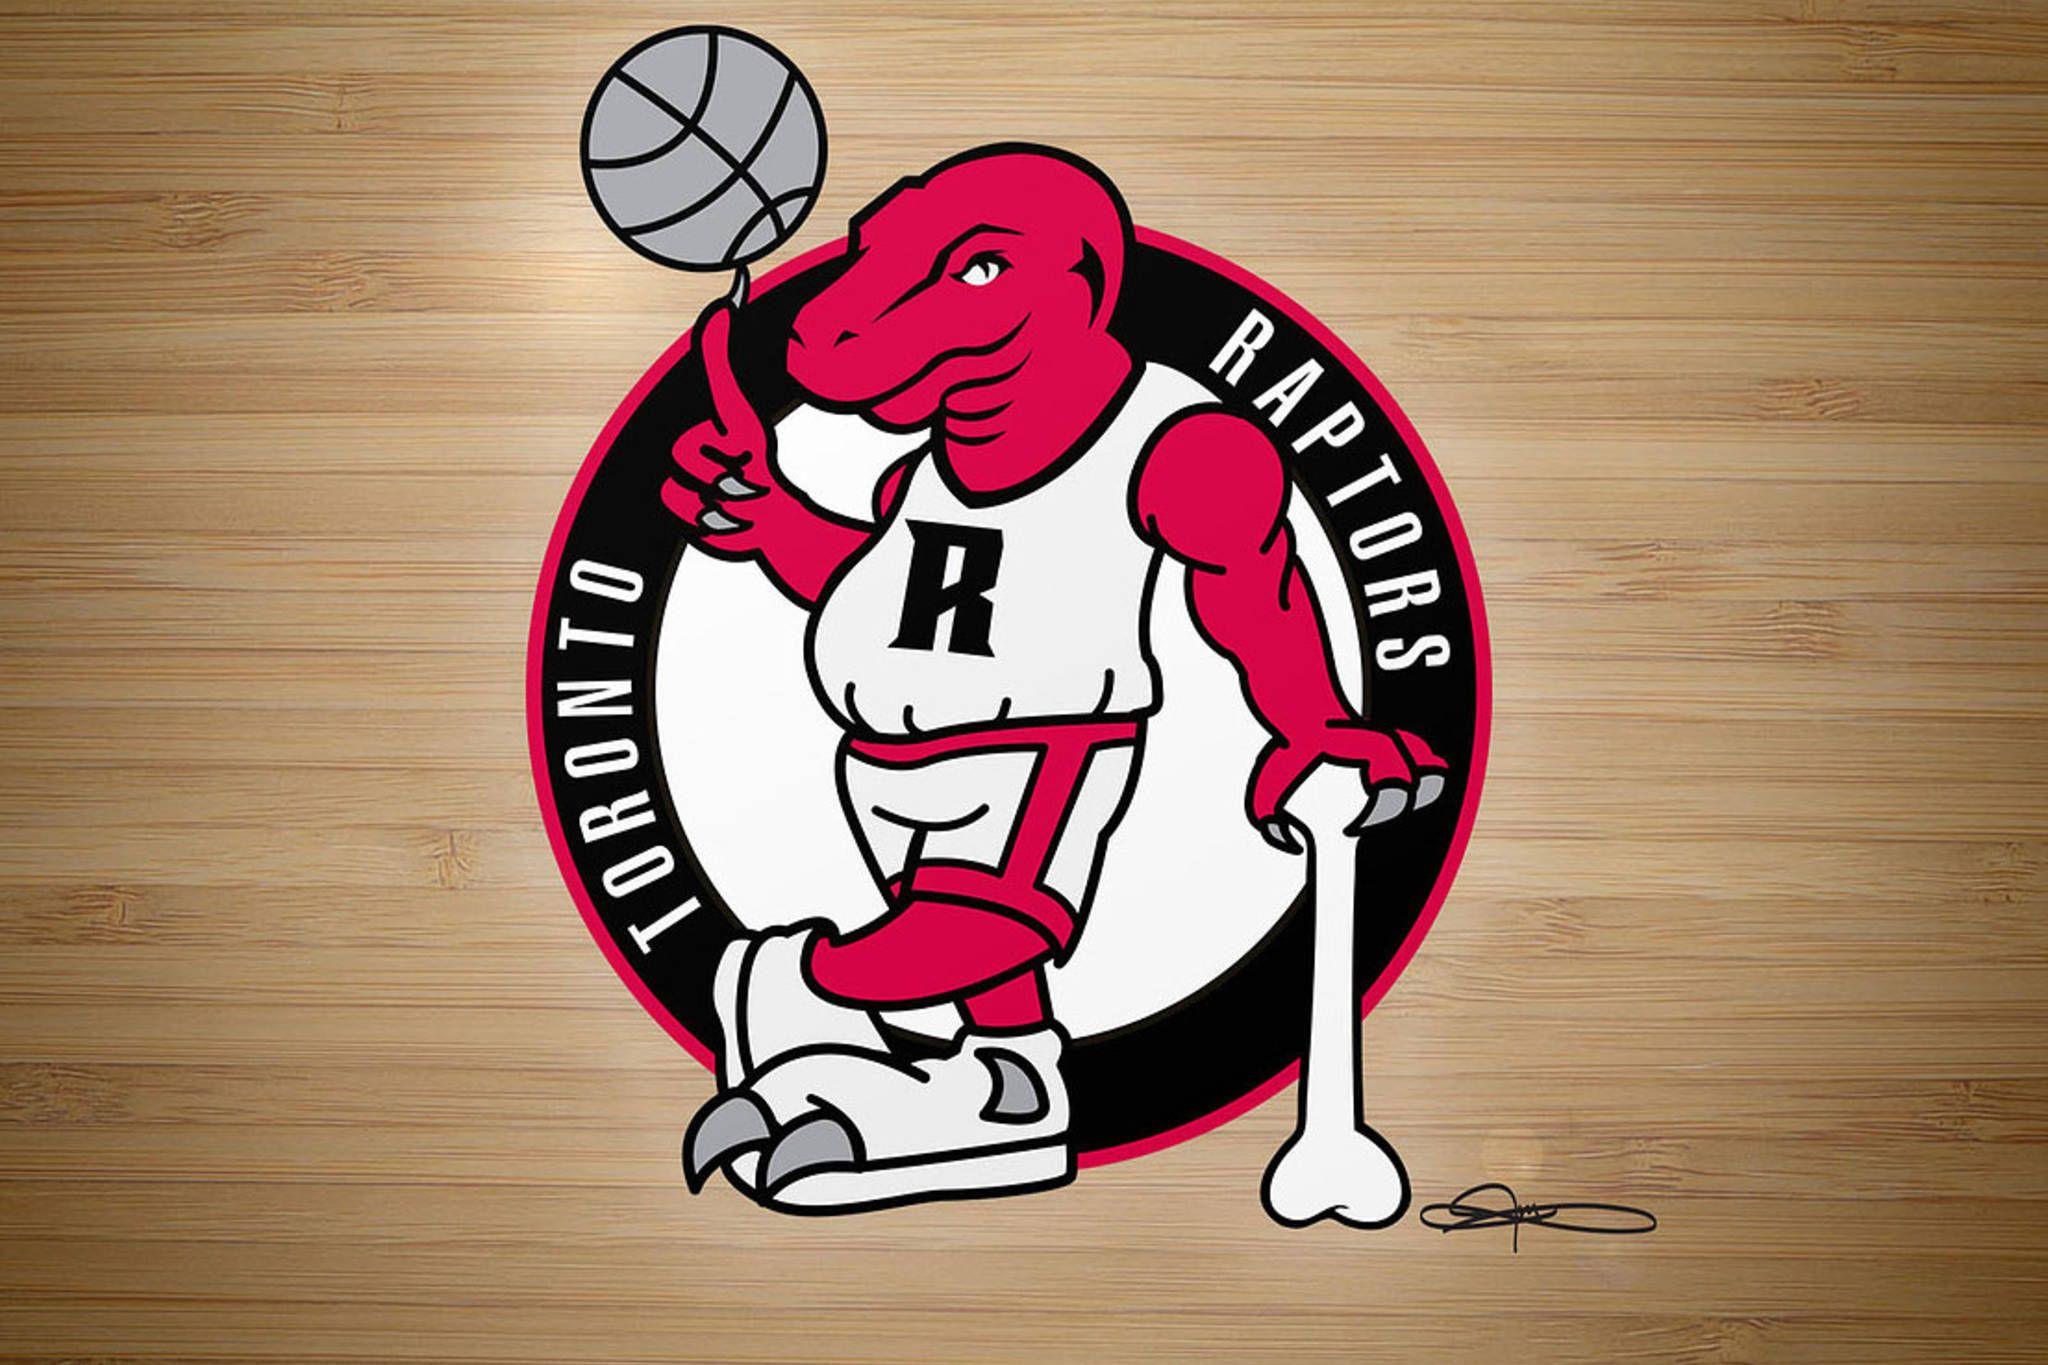 Toronto Raptors Logo - Toronto artist redraws every NBA team logo as the Raptors